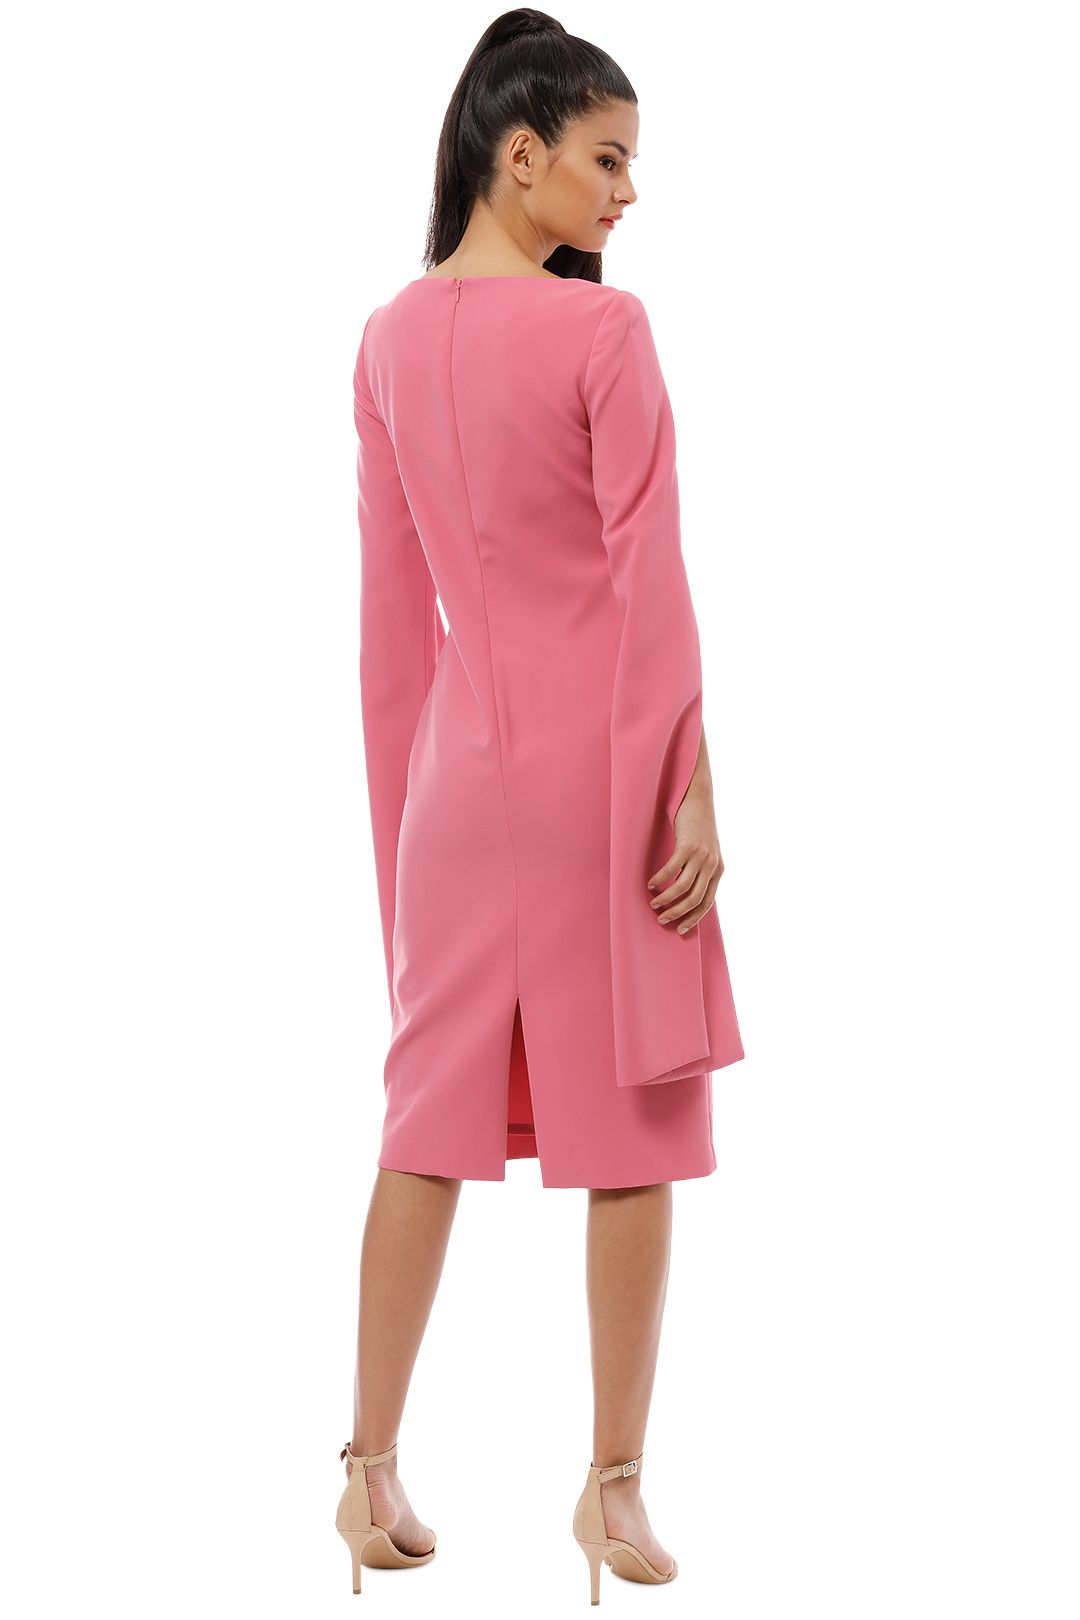 Trelise Cooper - Up Your Sleeve Dress - Pink - Back